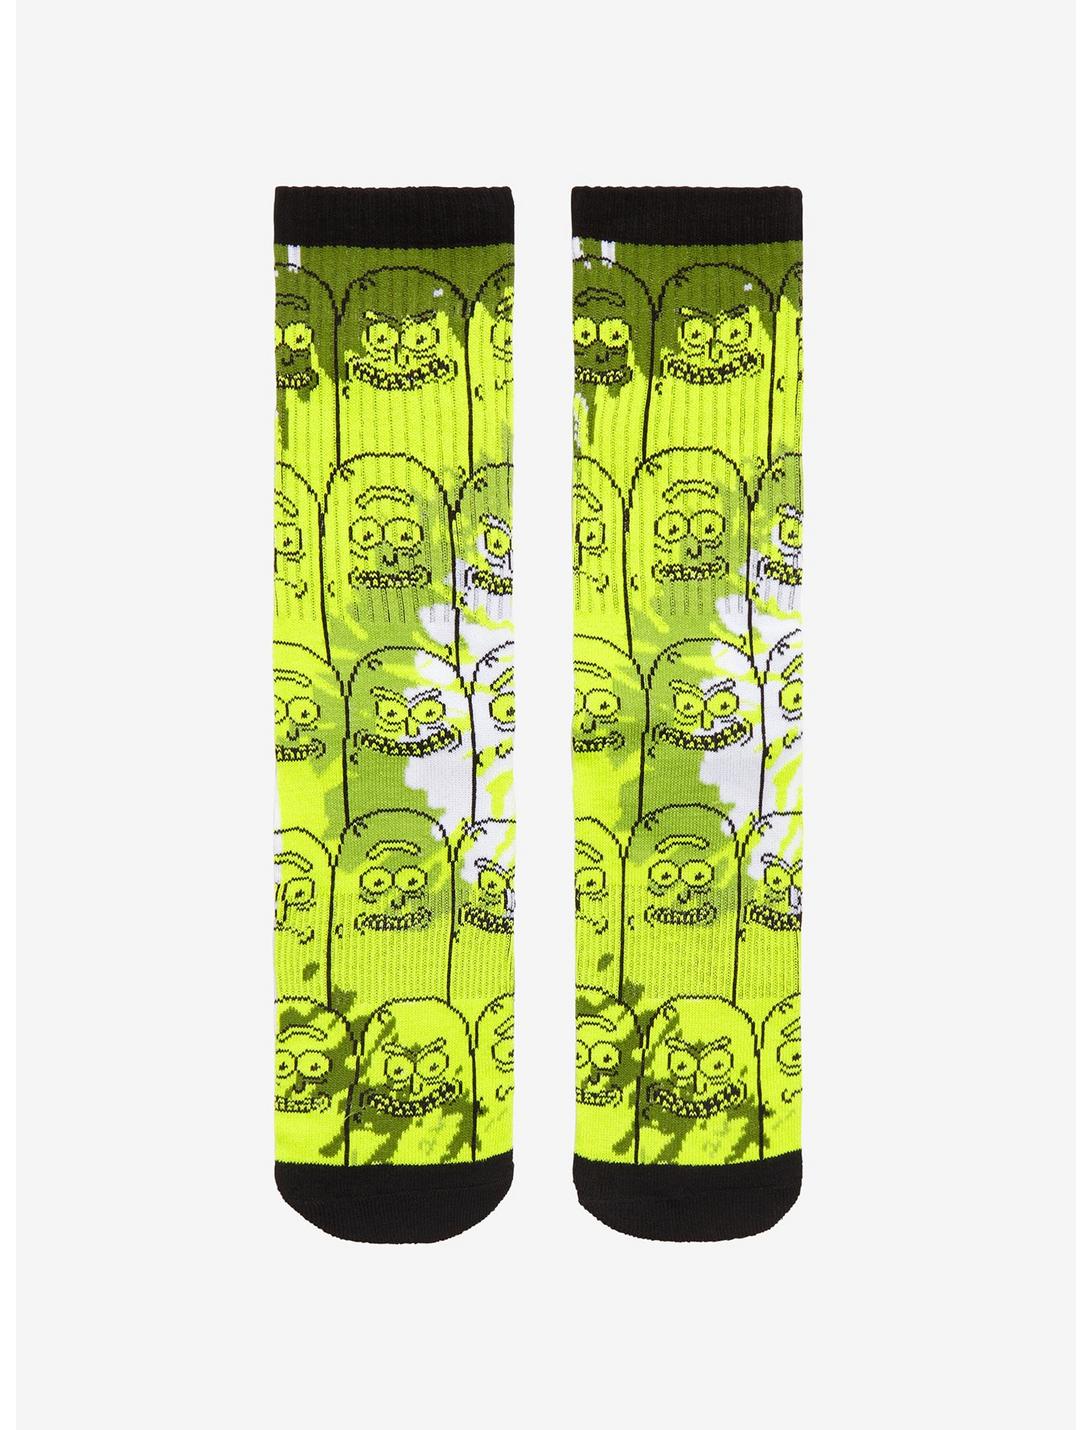 Rick And Morty Pickle Rick Tie-Dye Crew Socks, , hi-res